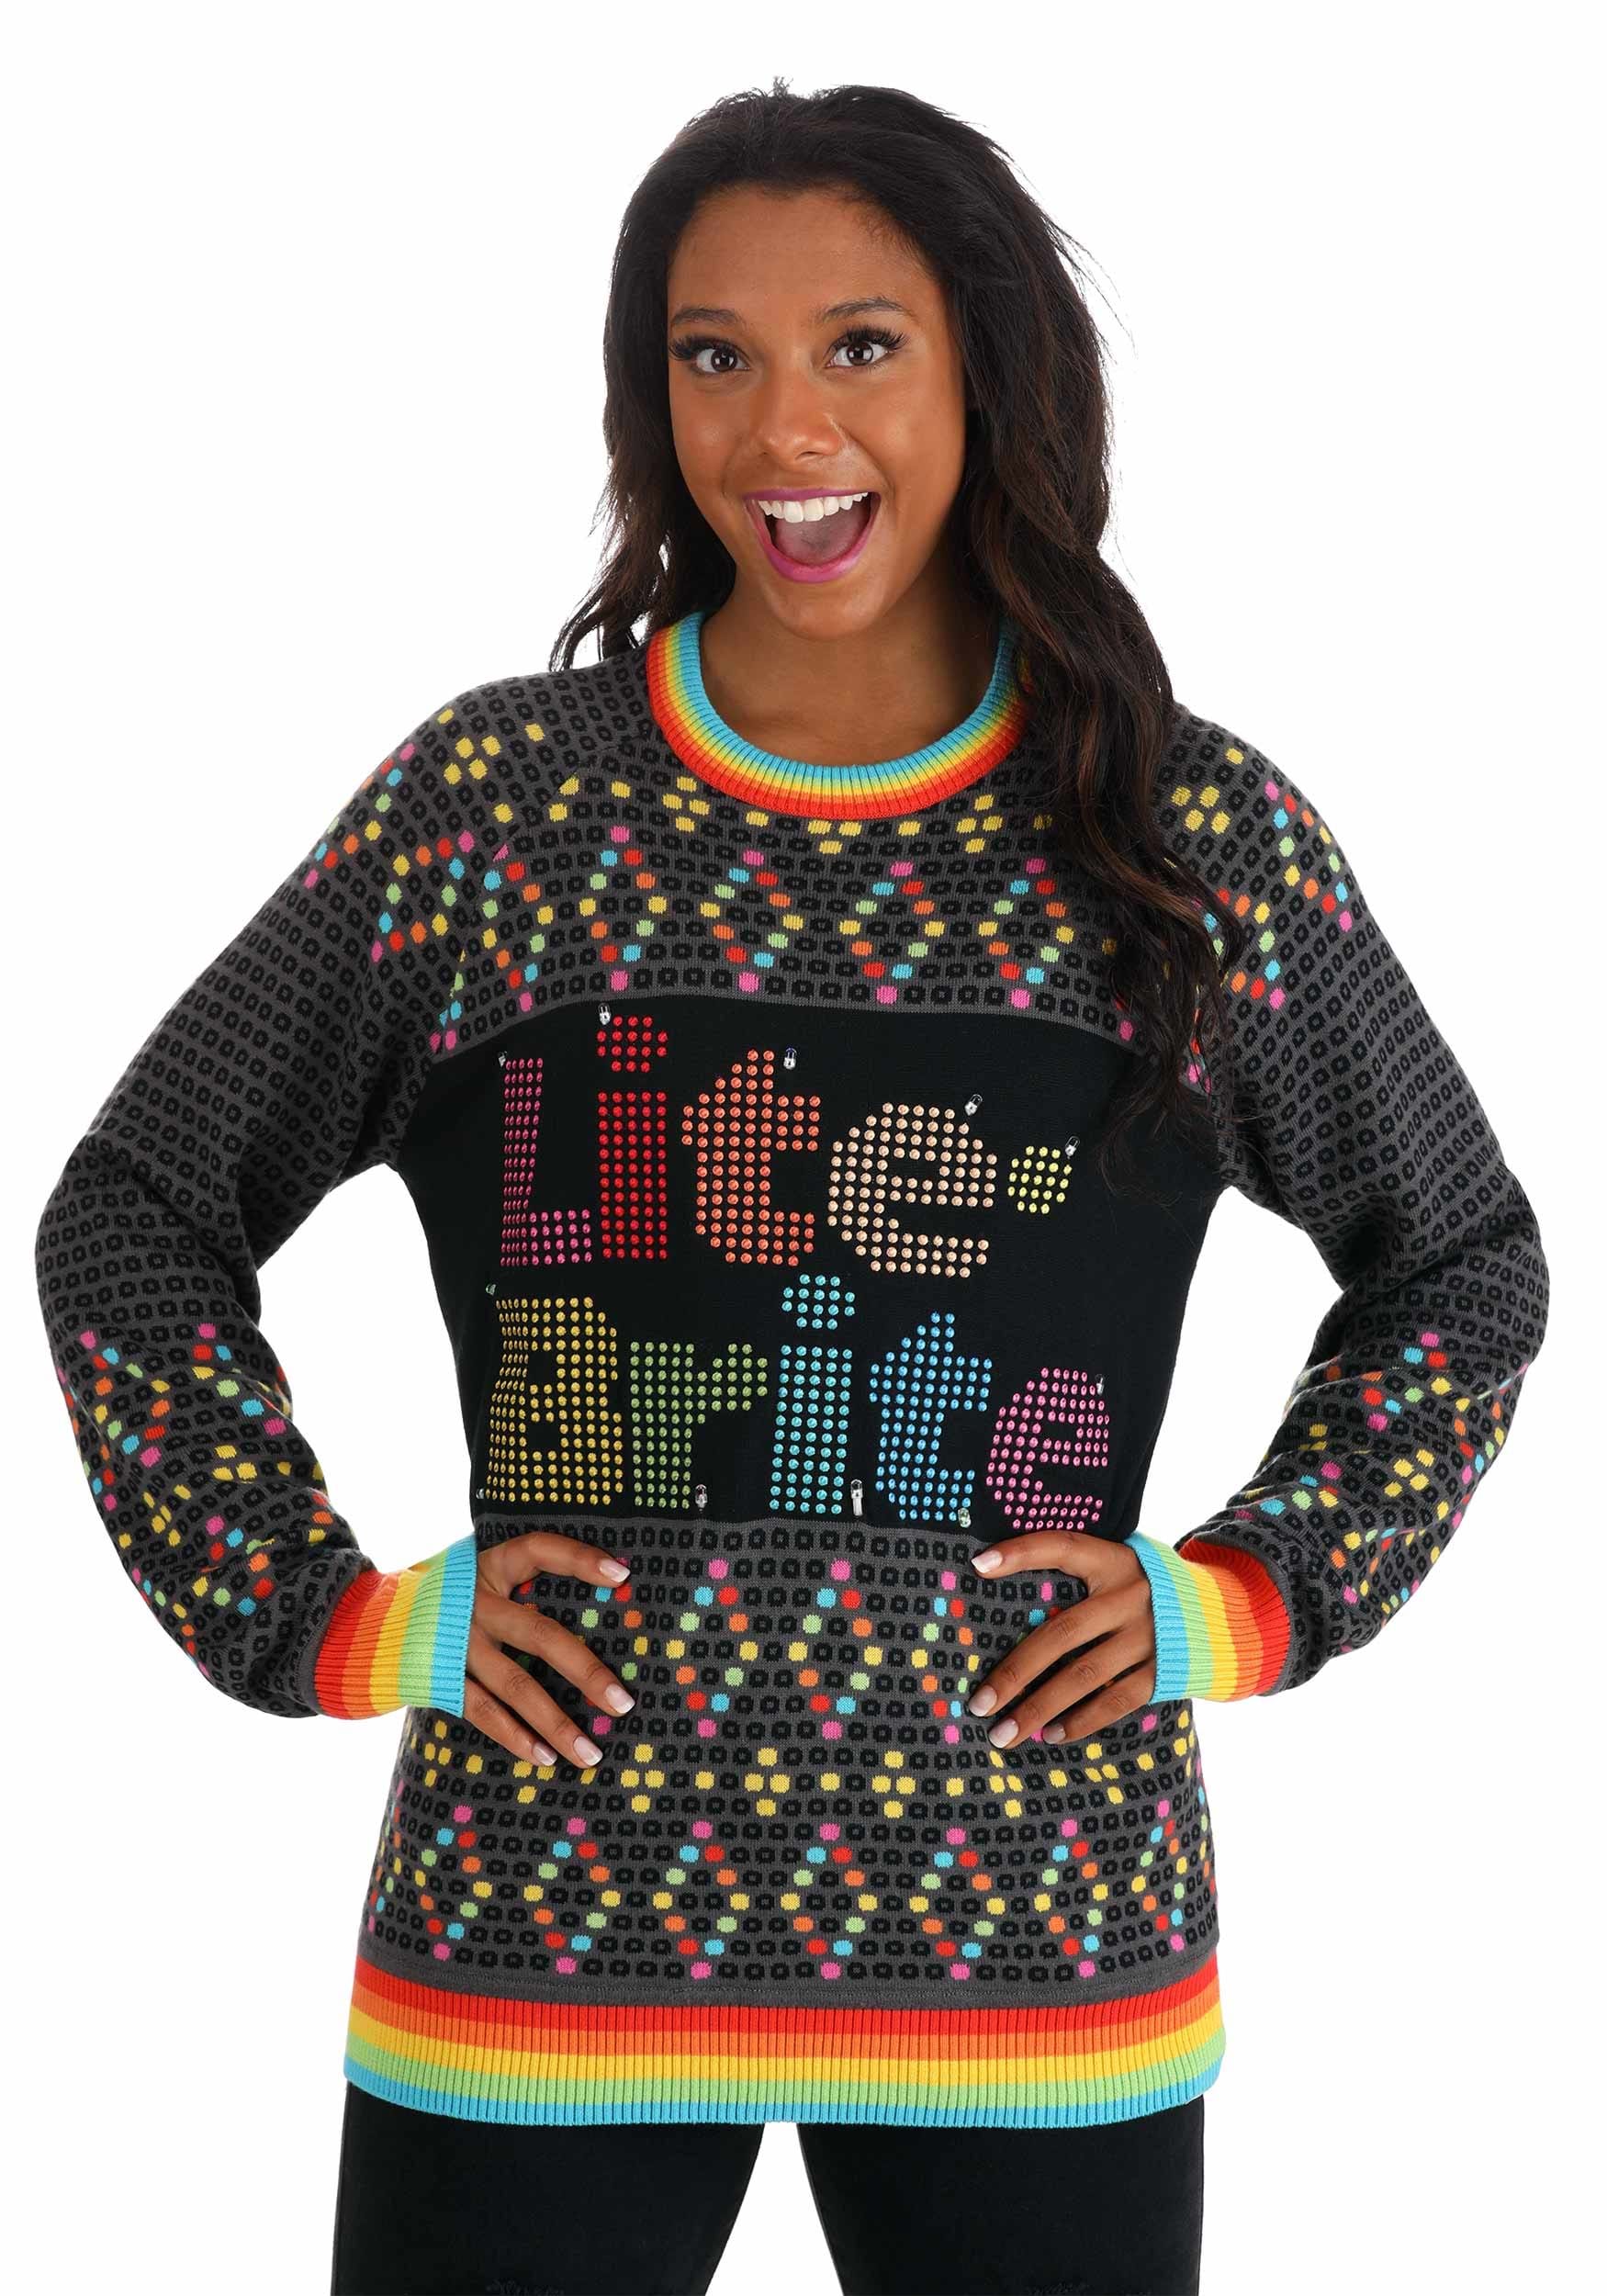 Hasbro Lite Brite Sweater for Adults